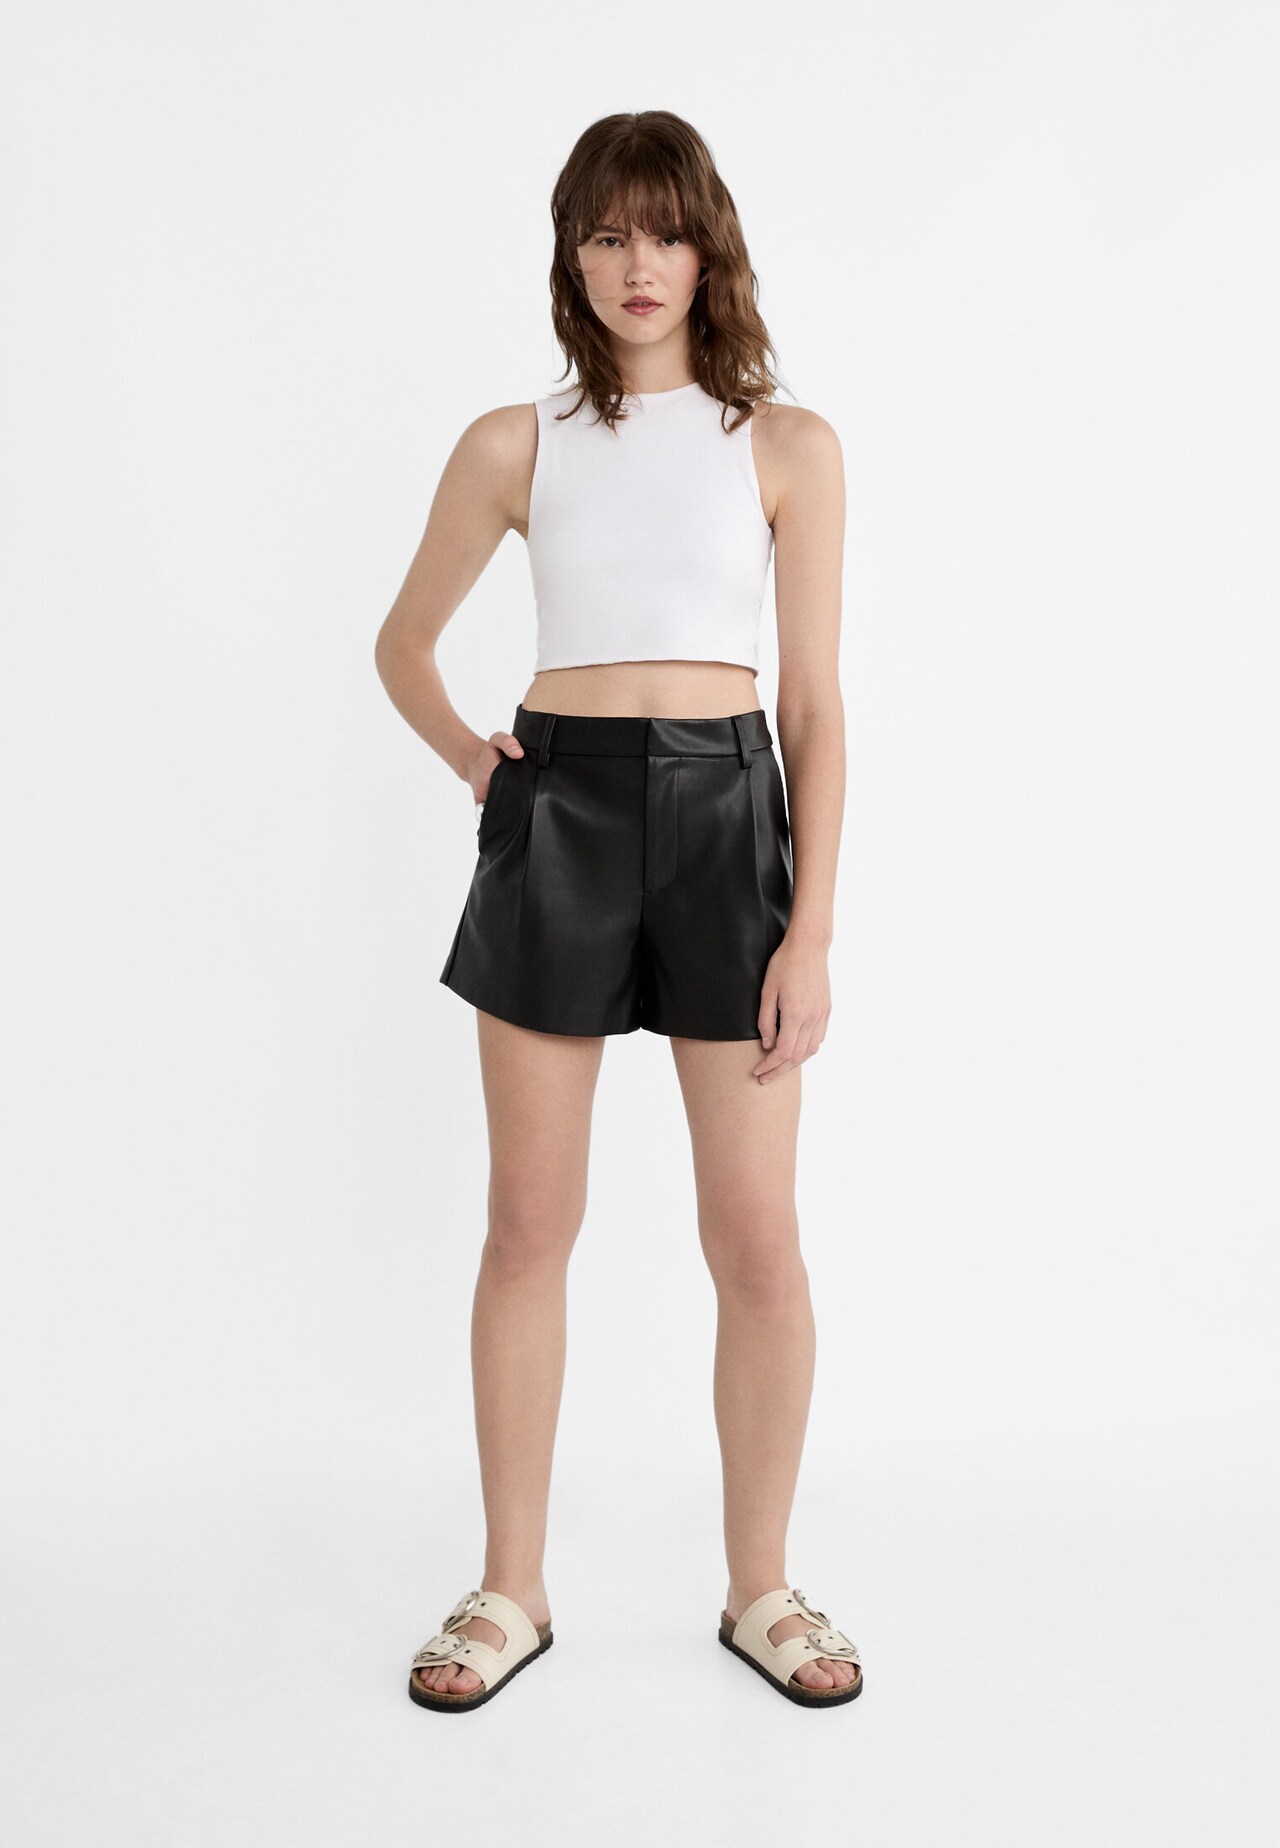 Faux leather shorts - Women's fashion